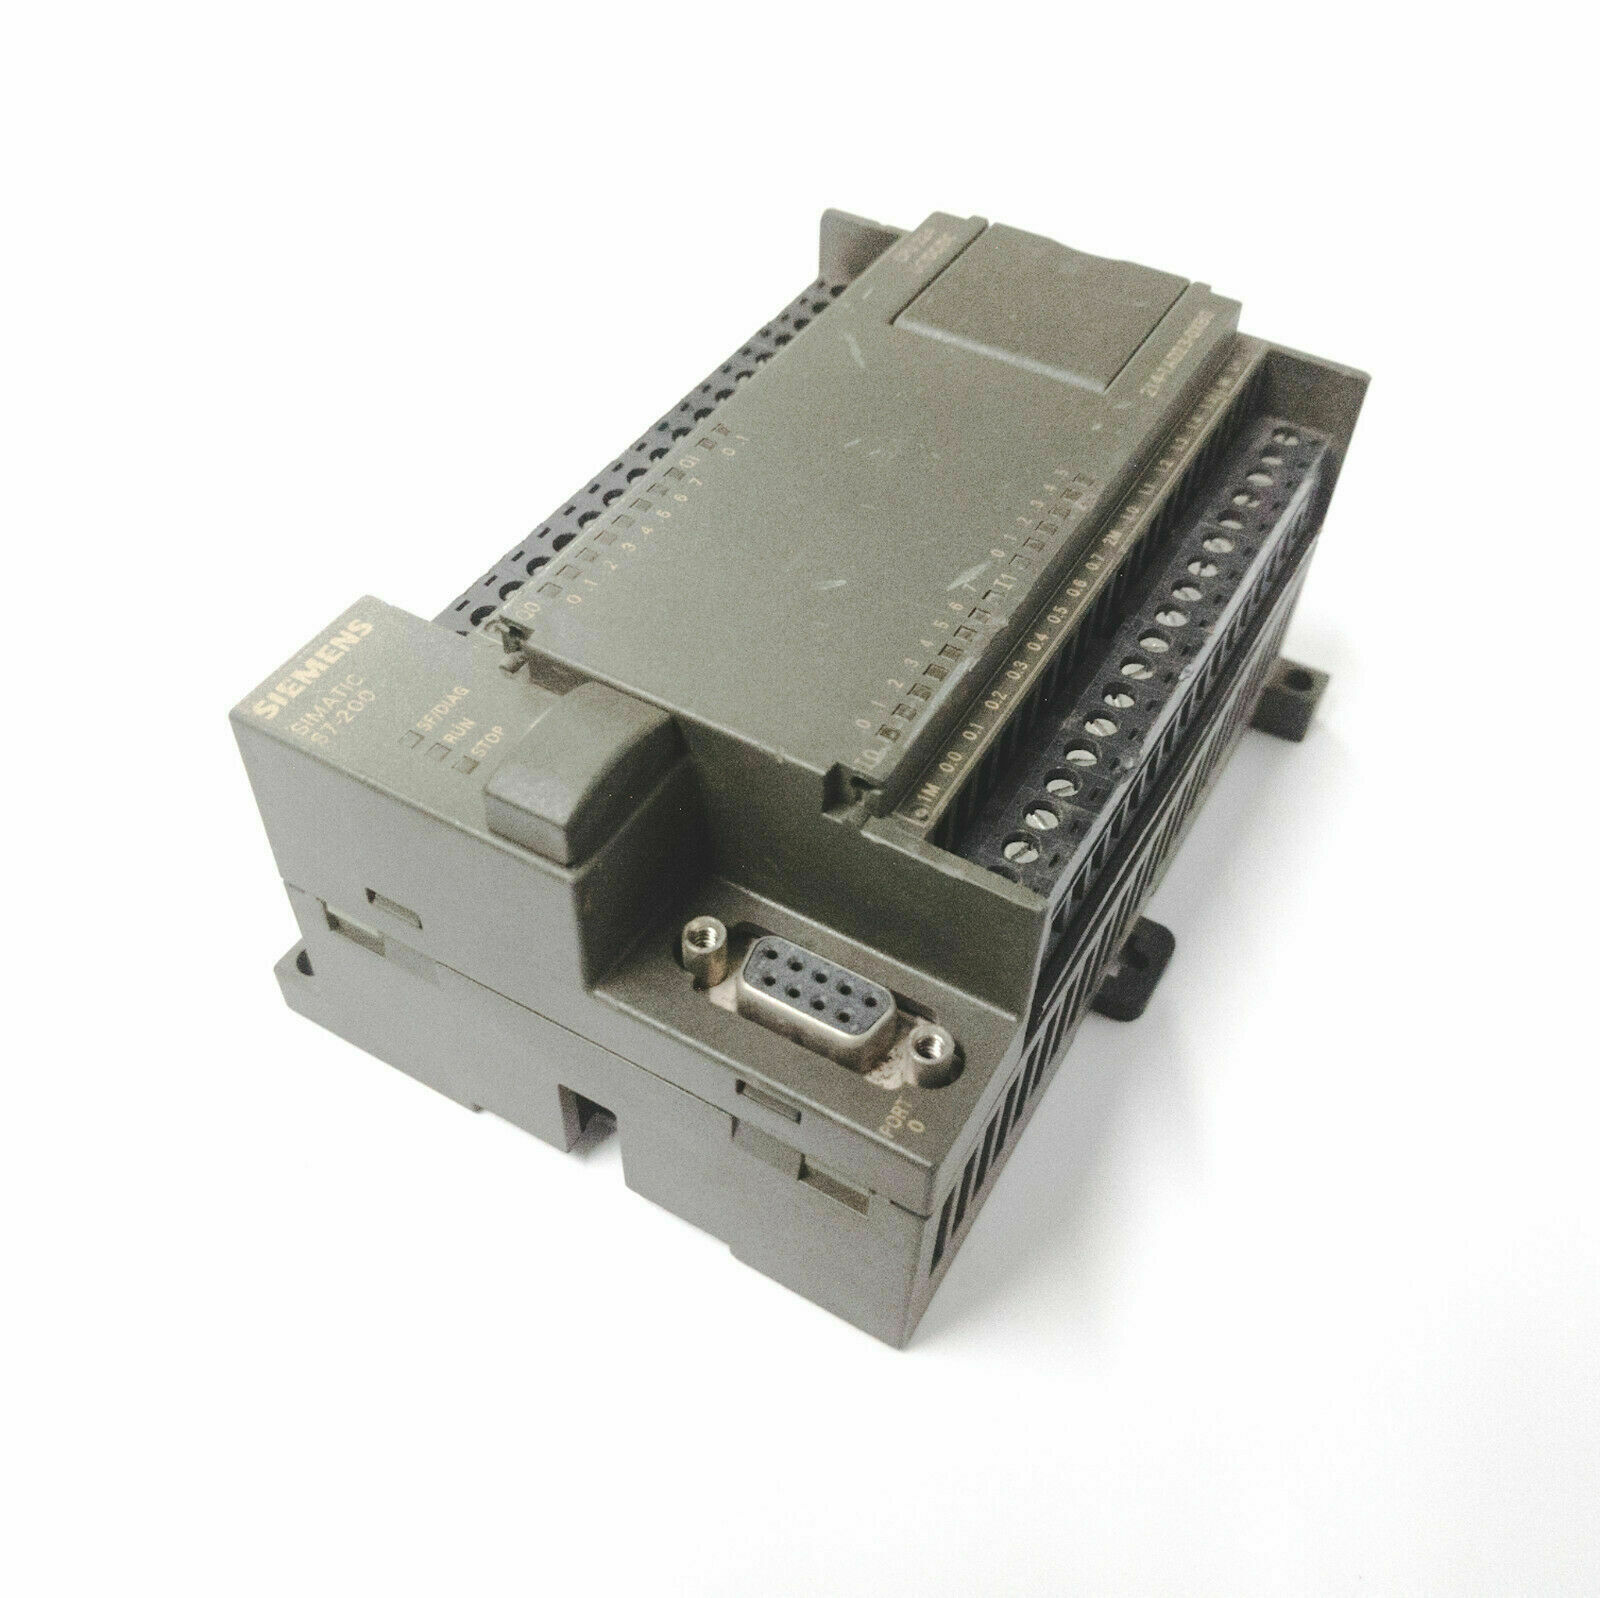 SIEMENS 6ES7214-1AD23-0XB8 SIMATIC S7-200 CN CPU 224 COMPACT UNIT PLC